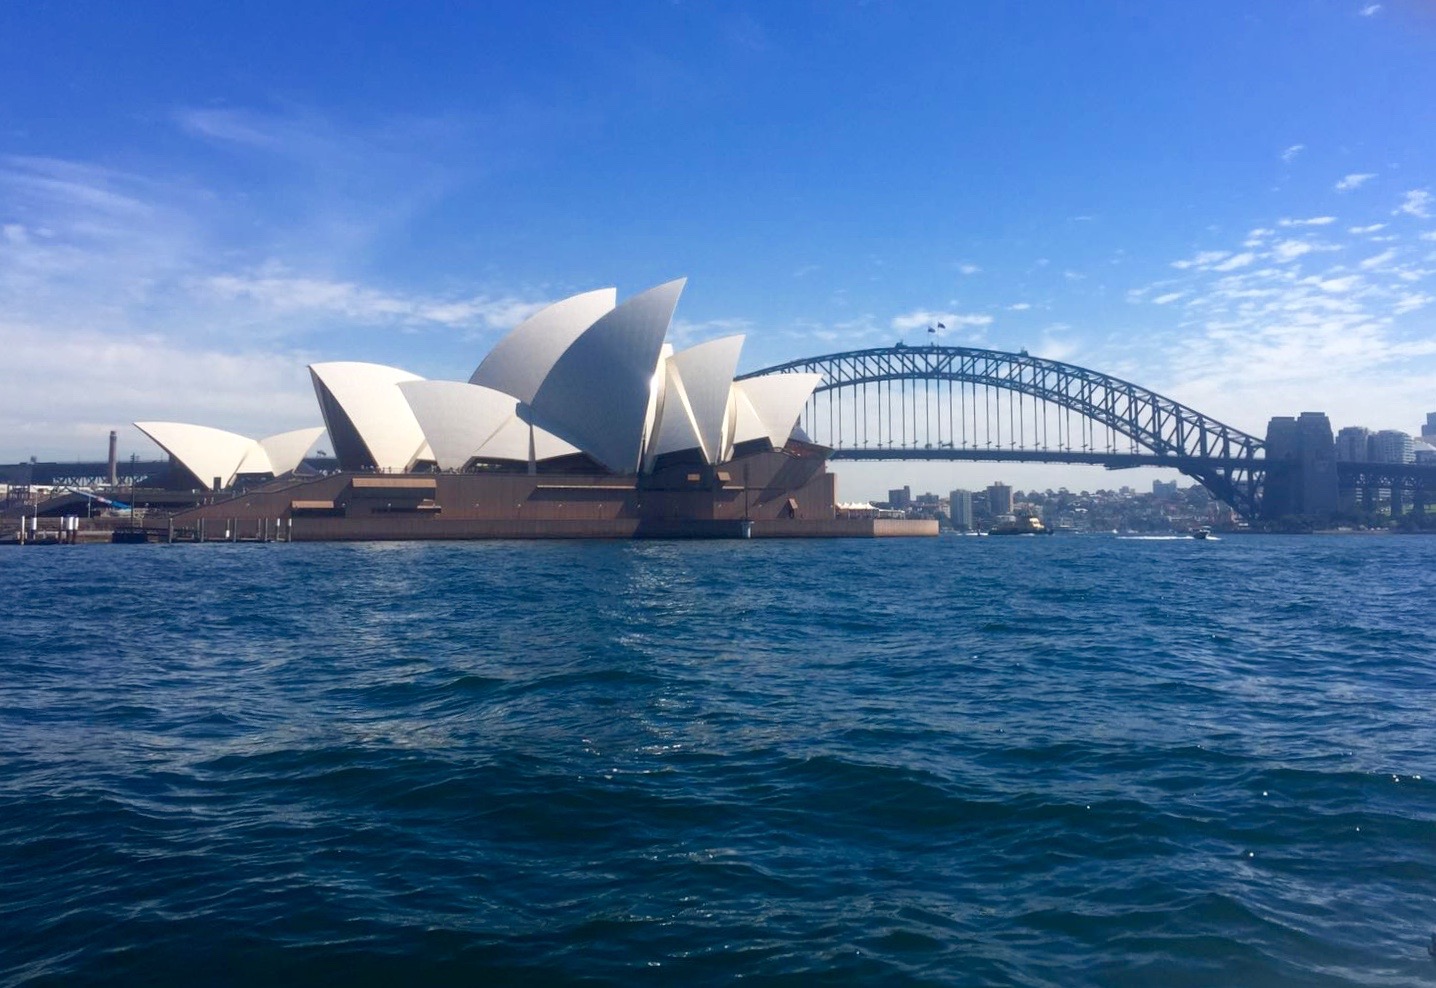 The Sydney Opera House and Sydney Harbour Bridge